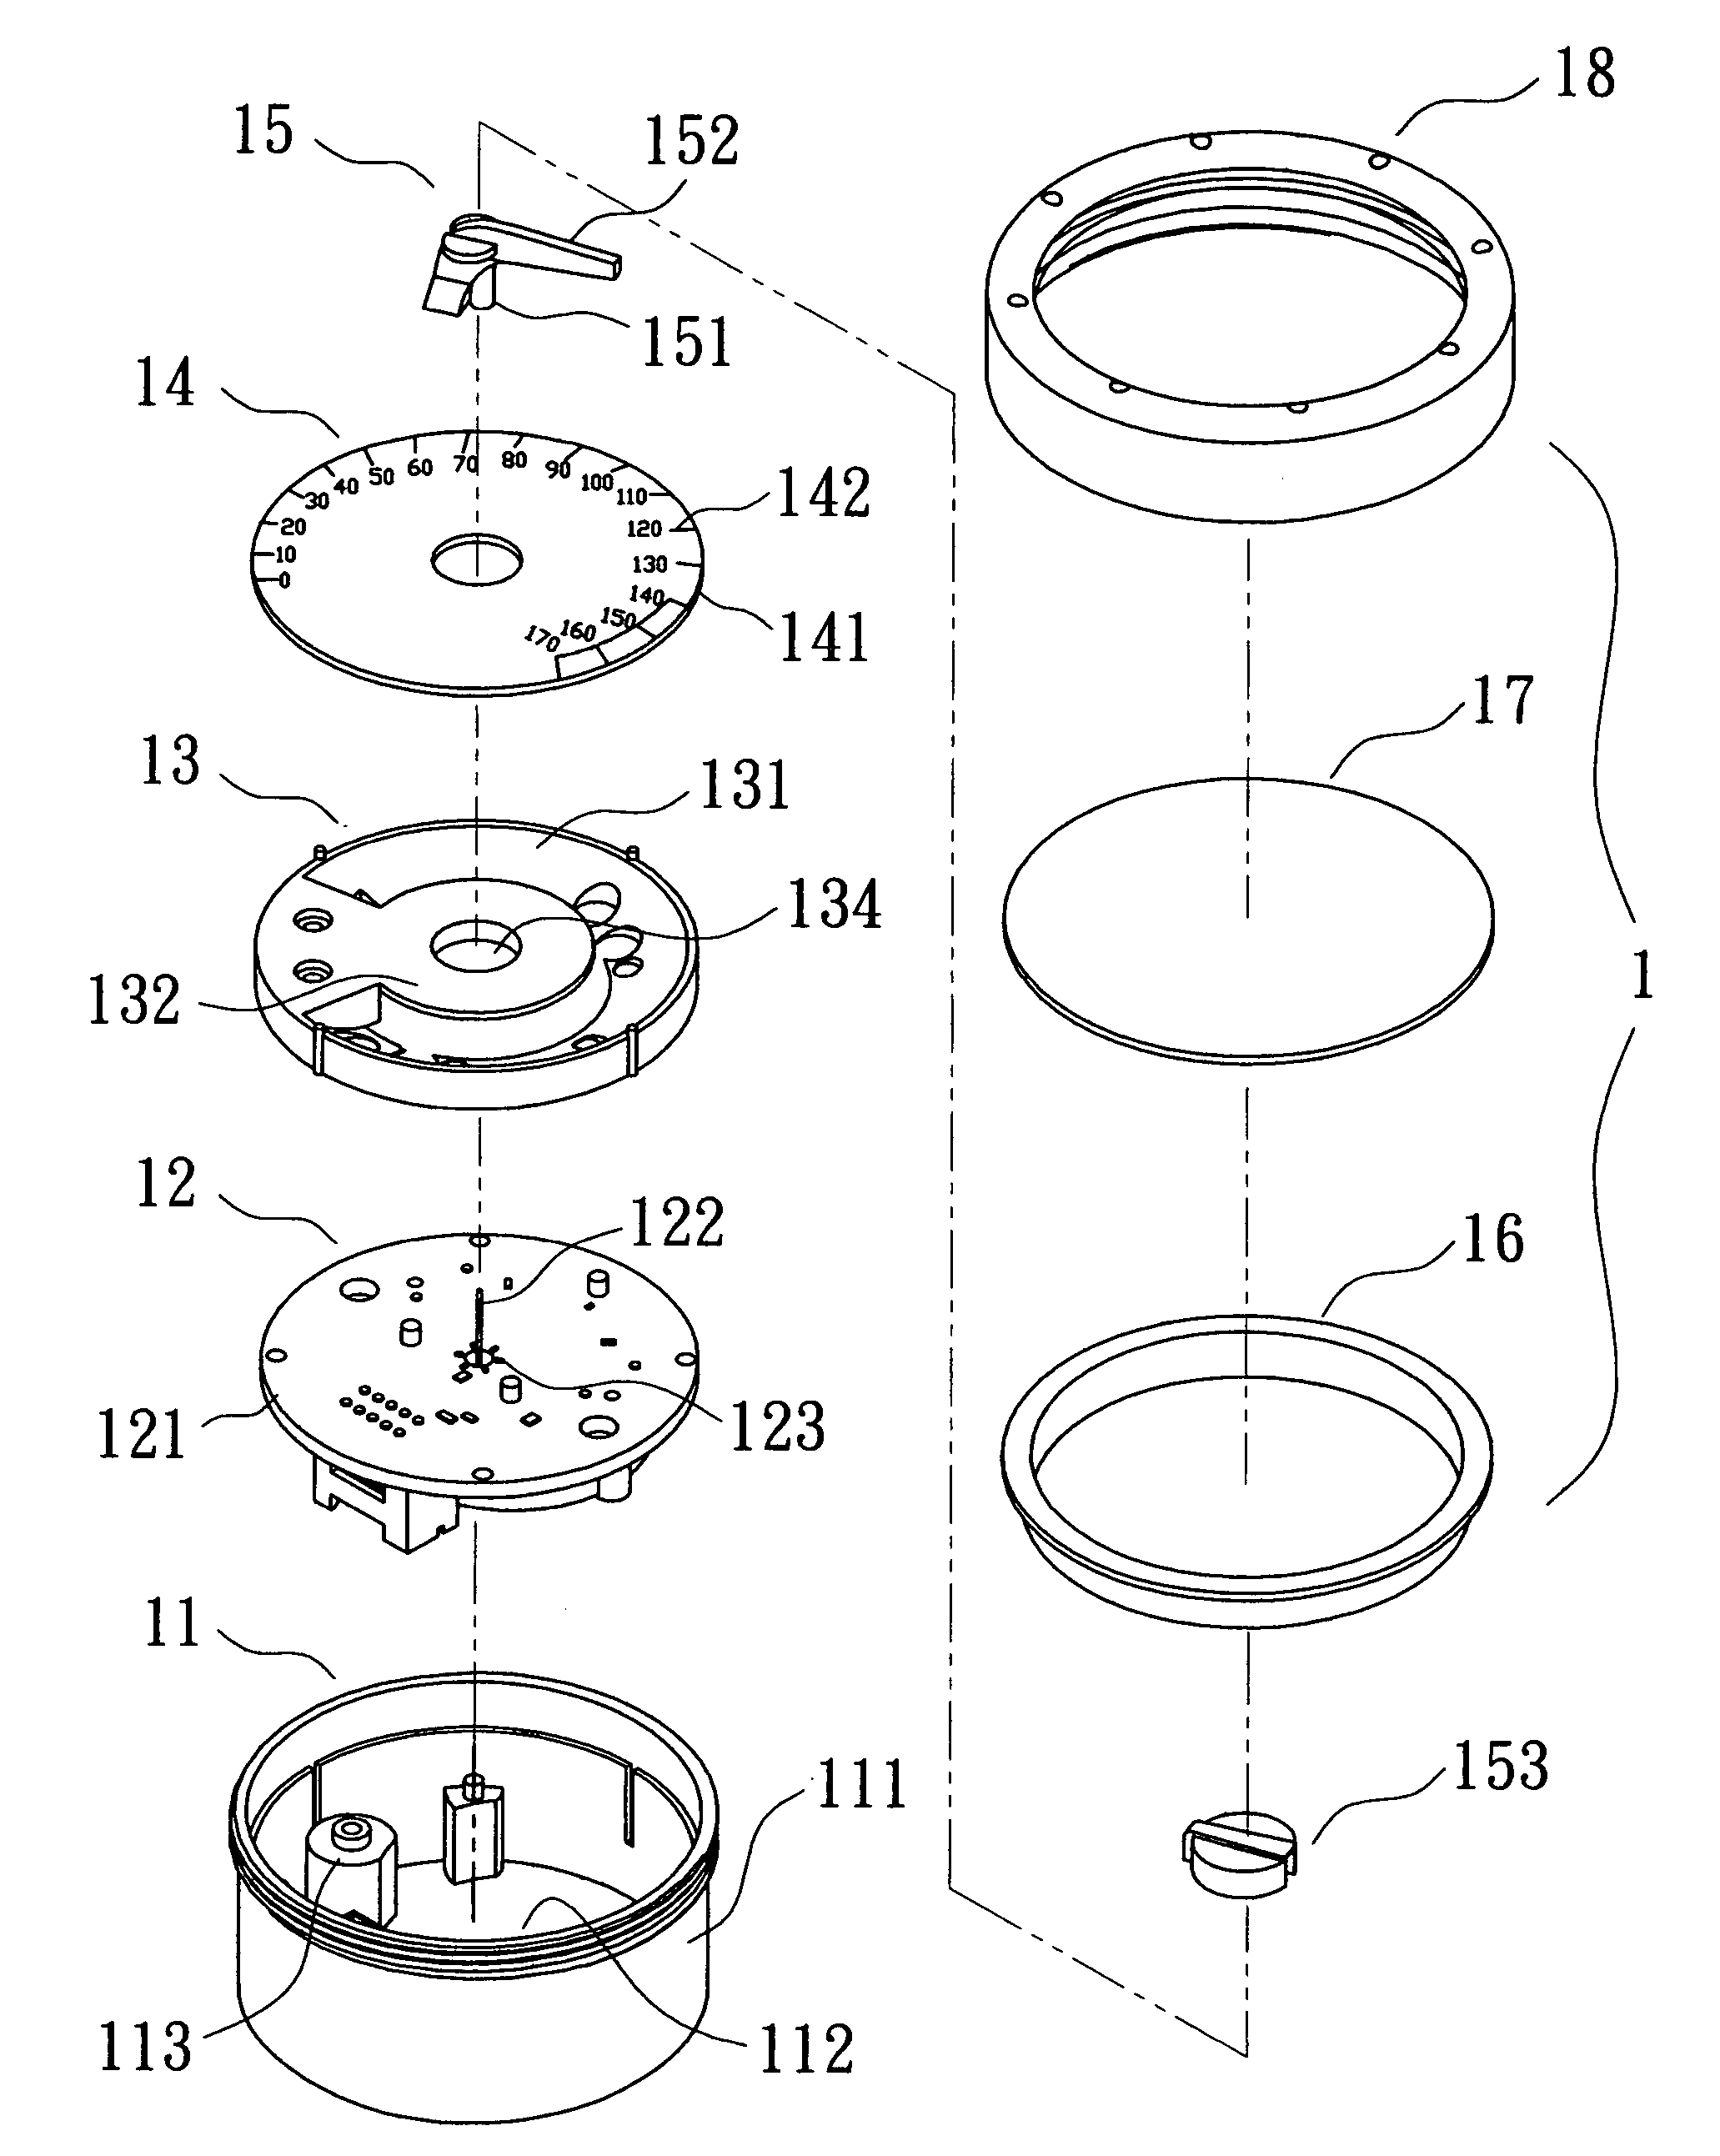 Automobile instrument panel lighting structure